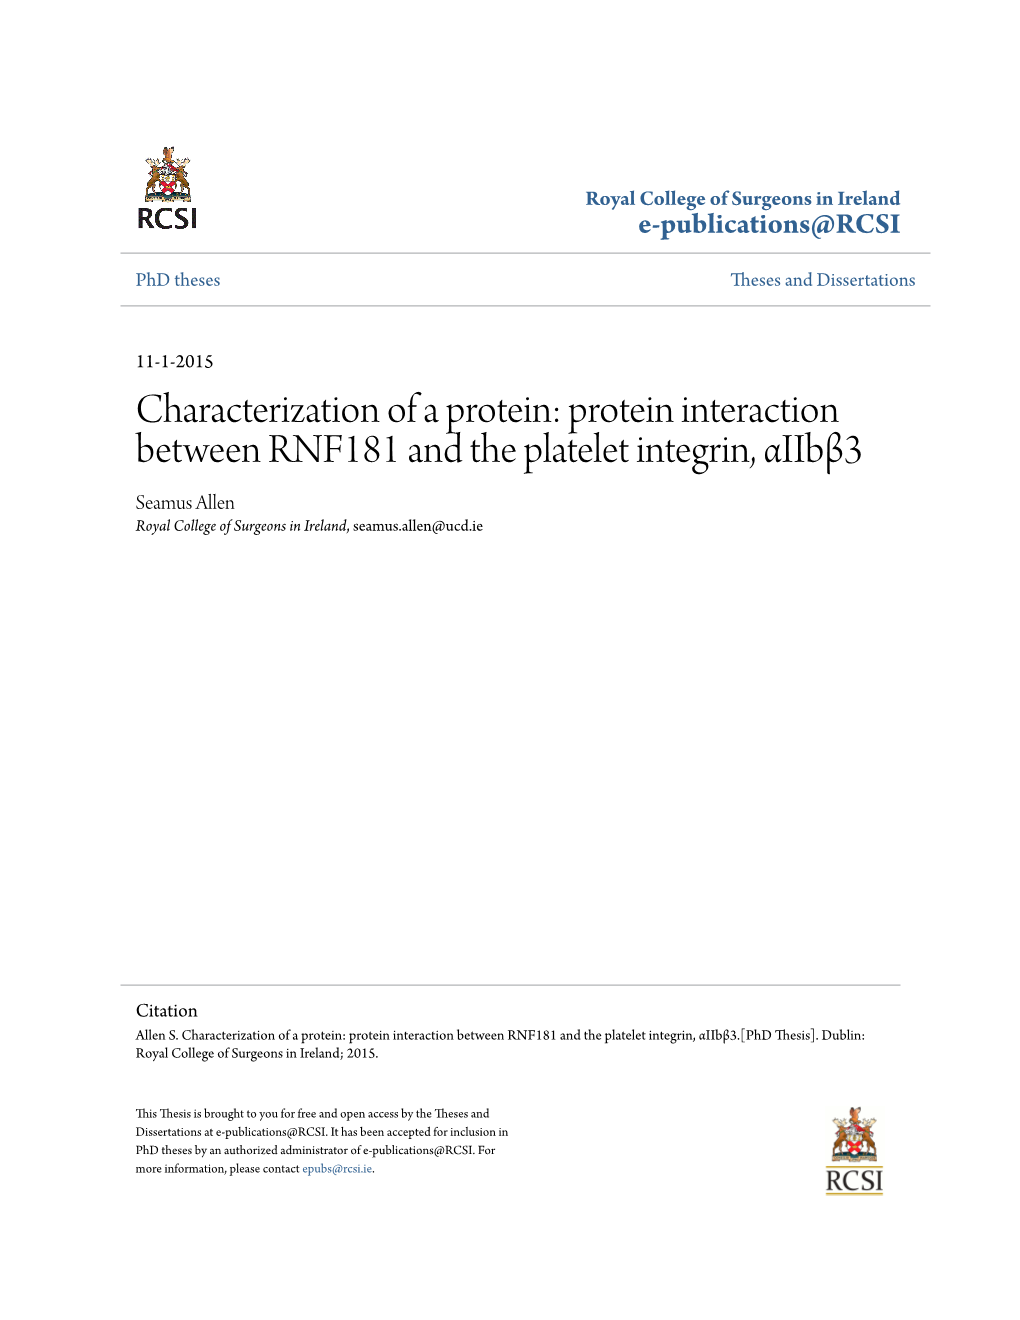 Protein Interaction Between RNF181 and the Platelet Integrin, Αiibβ3 Seamus Allen Royal College of Surgeons in Ireland, Seamus.Allen@Ucd.Ie